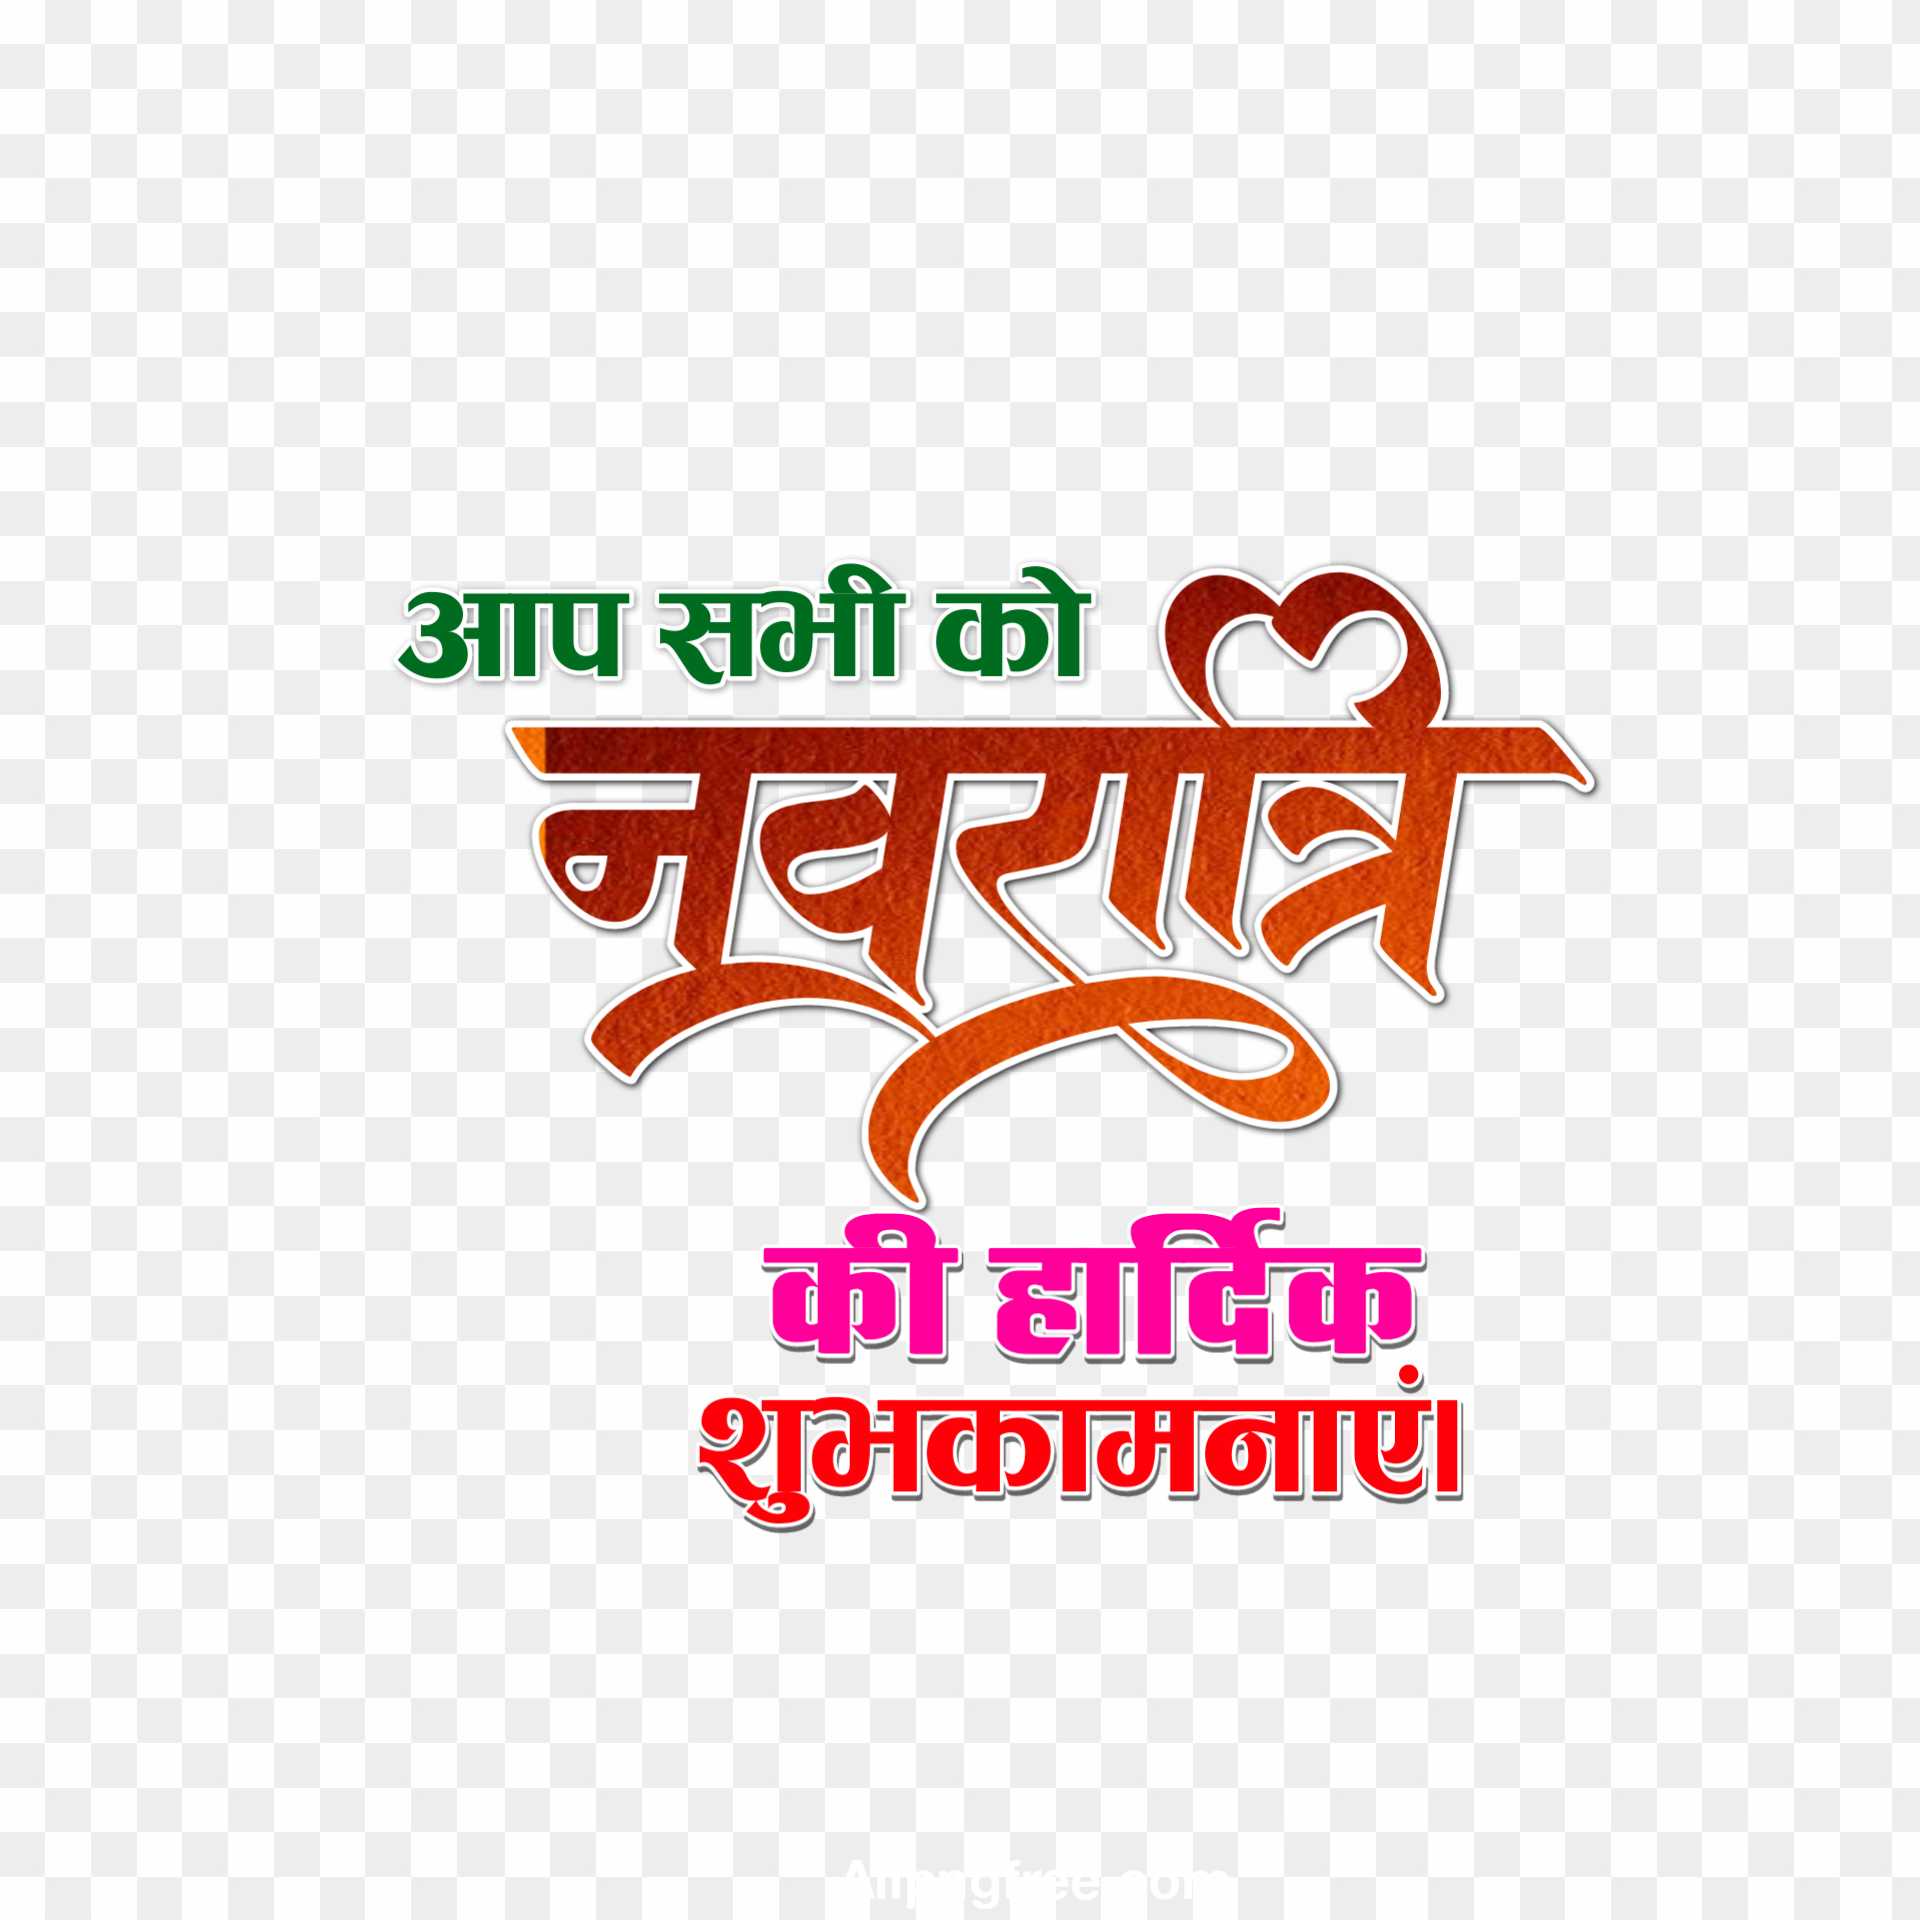 Navratri stylish Hindi font text PNG images - transparent background